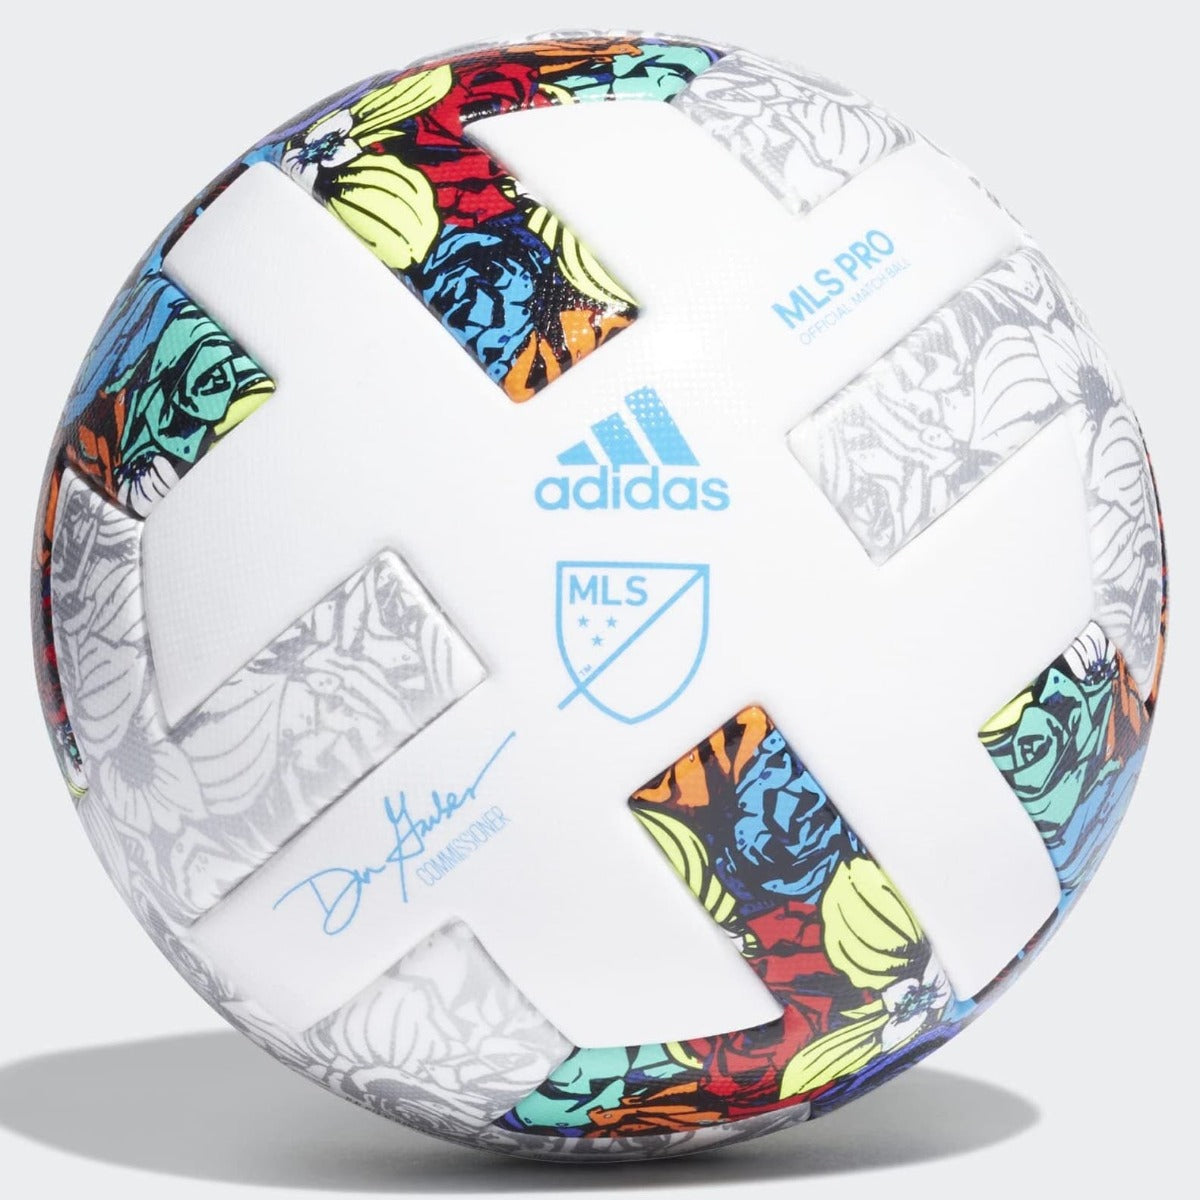 adidas MLS Pro Ball - White-Solar Yellow-Power Blue (Front)